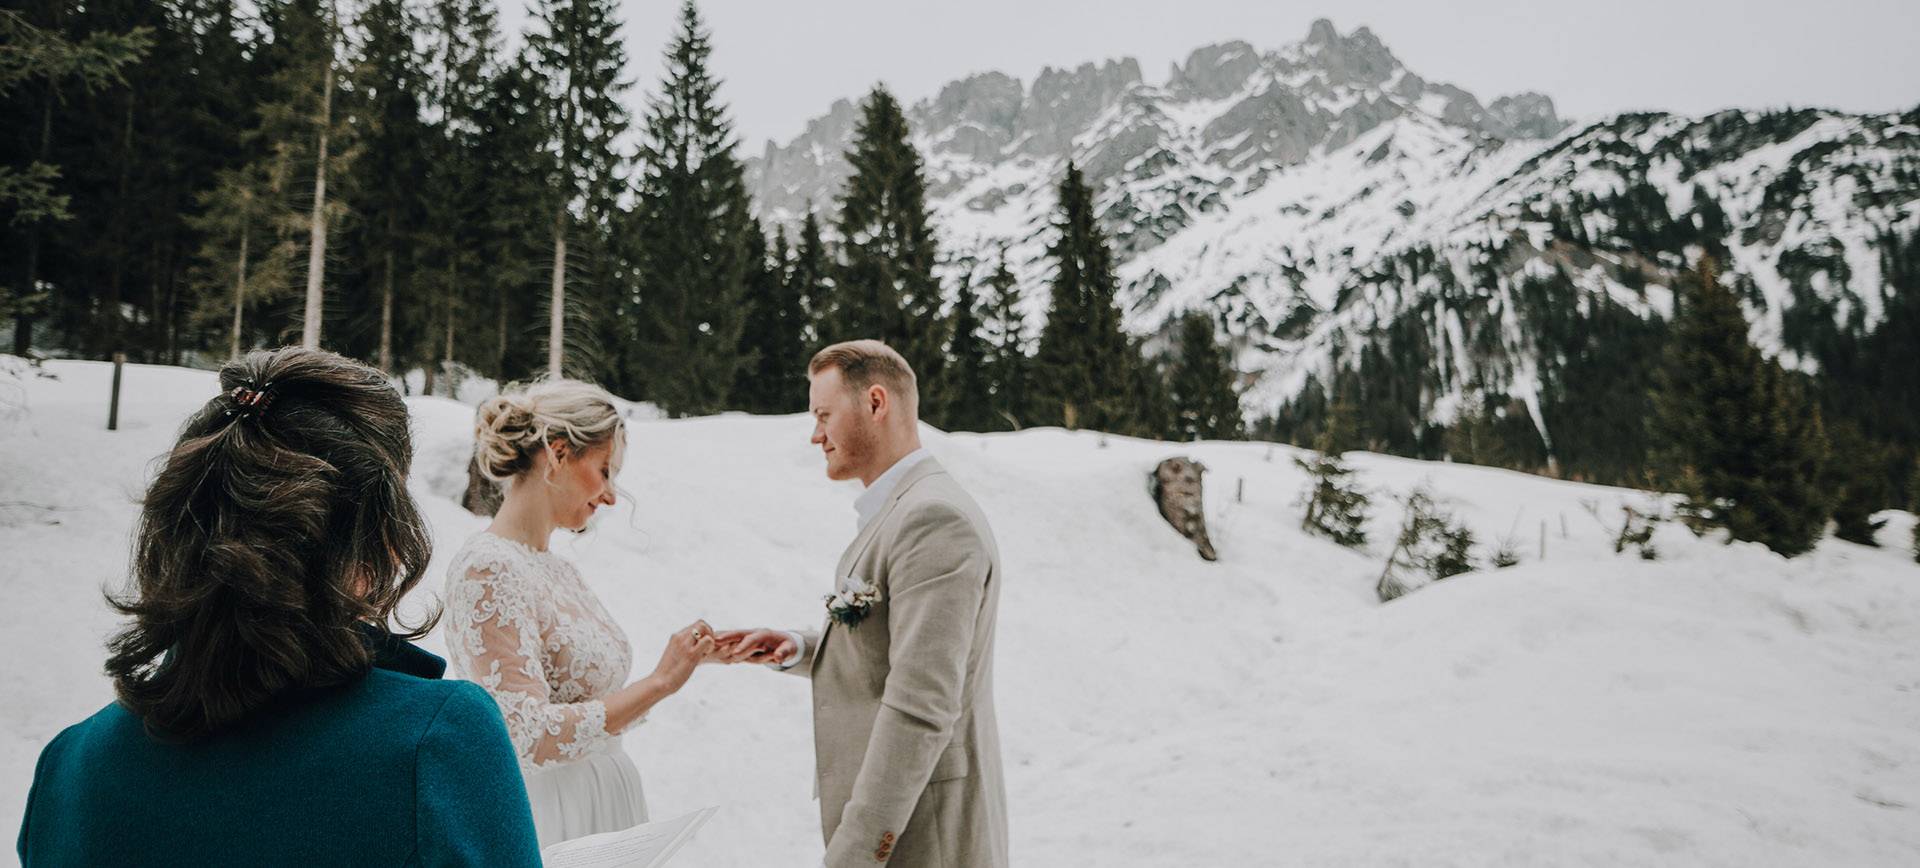 mountain elopement austria - winter wedding